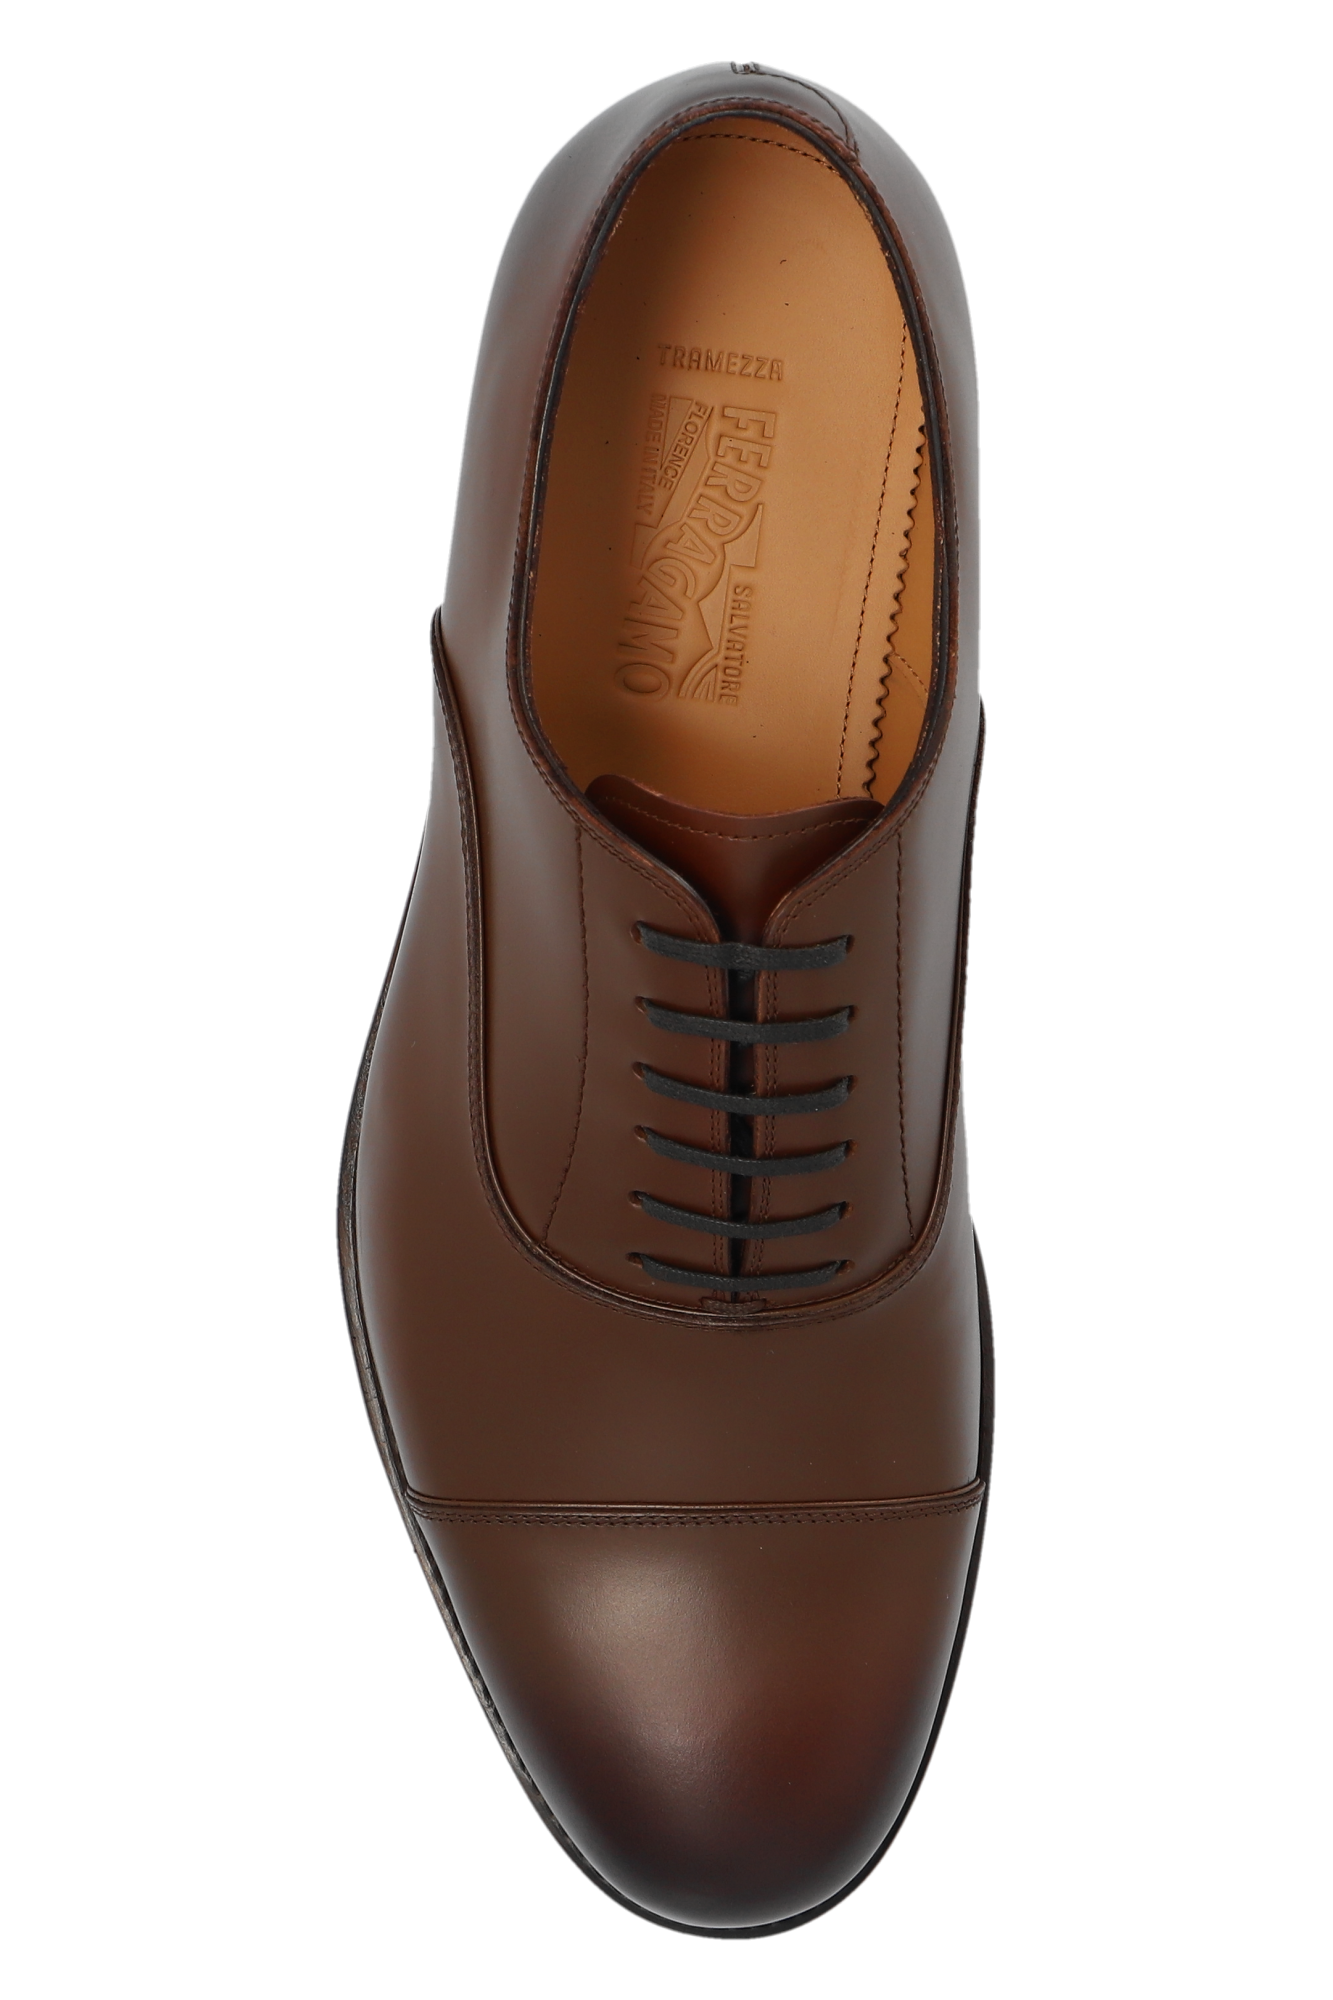 FERRAGAMO Leather Oxford shoes